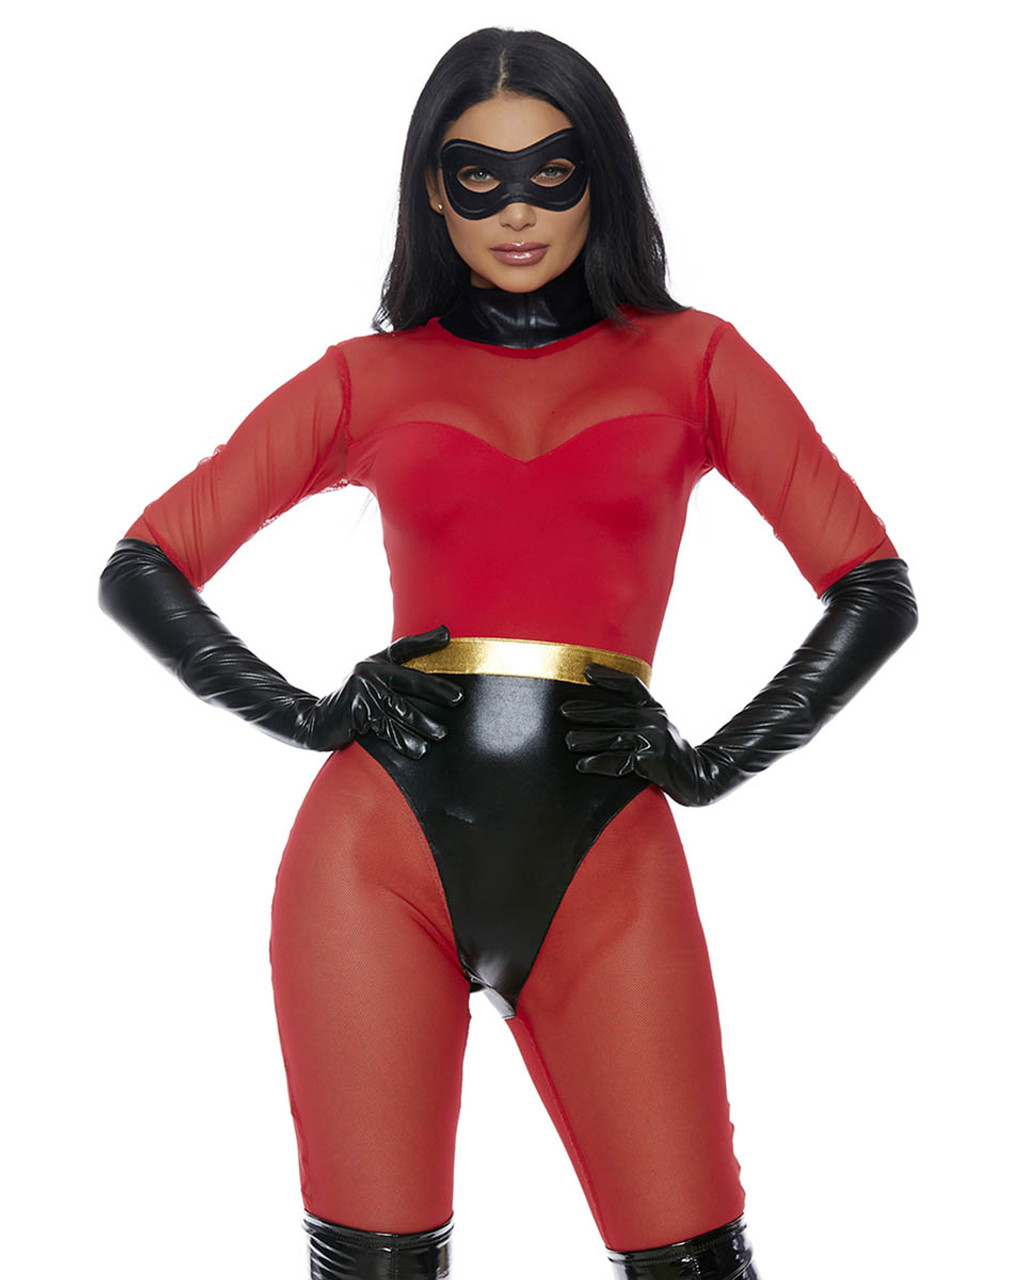 ForPlay  FP-559611, Super Suit Superhero Costume